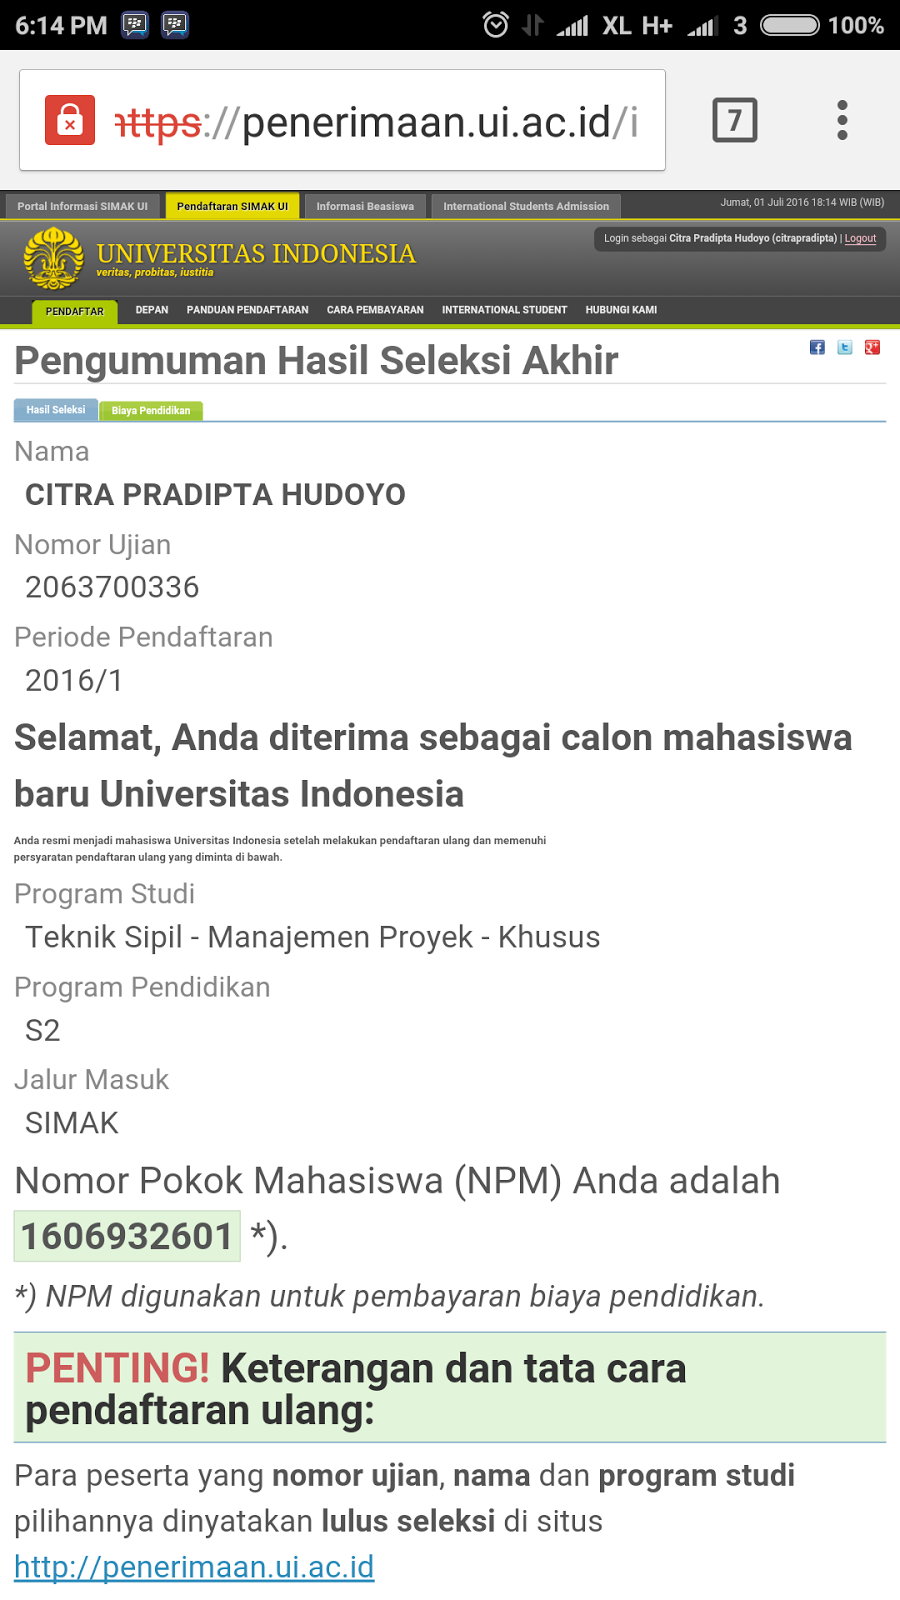 Pengalaman Daftar S2 Magister Universitas Indonesia ( Ui ) - Citra Pradipta | Be Right In The Right Place